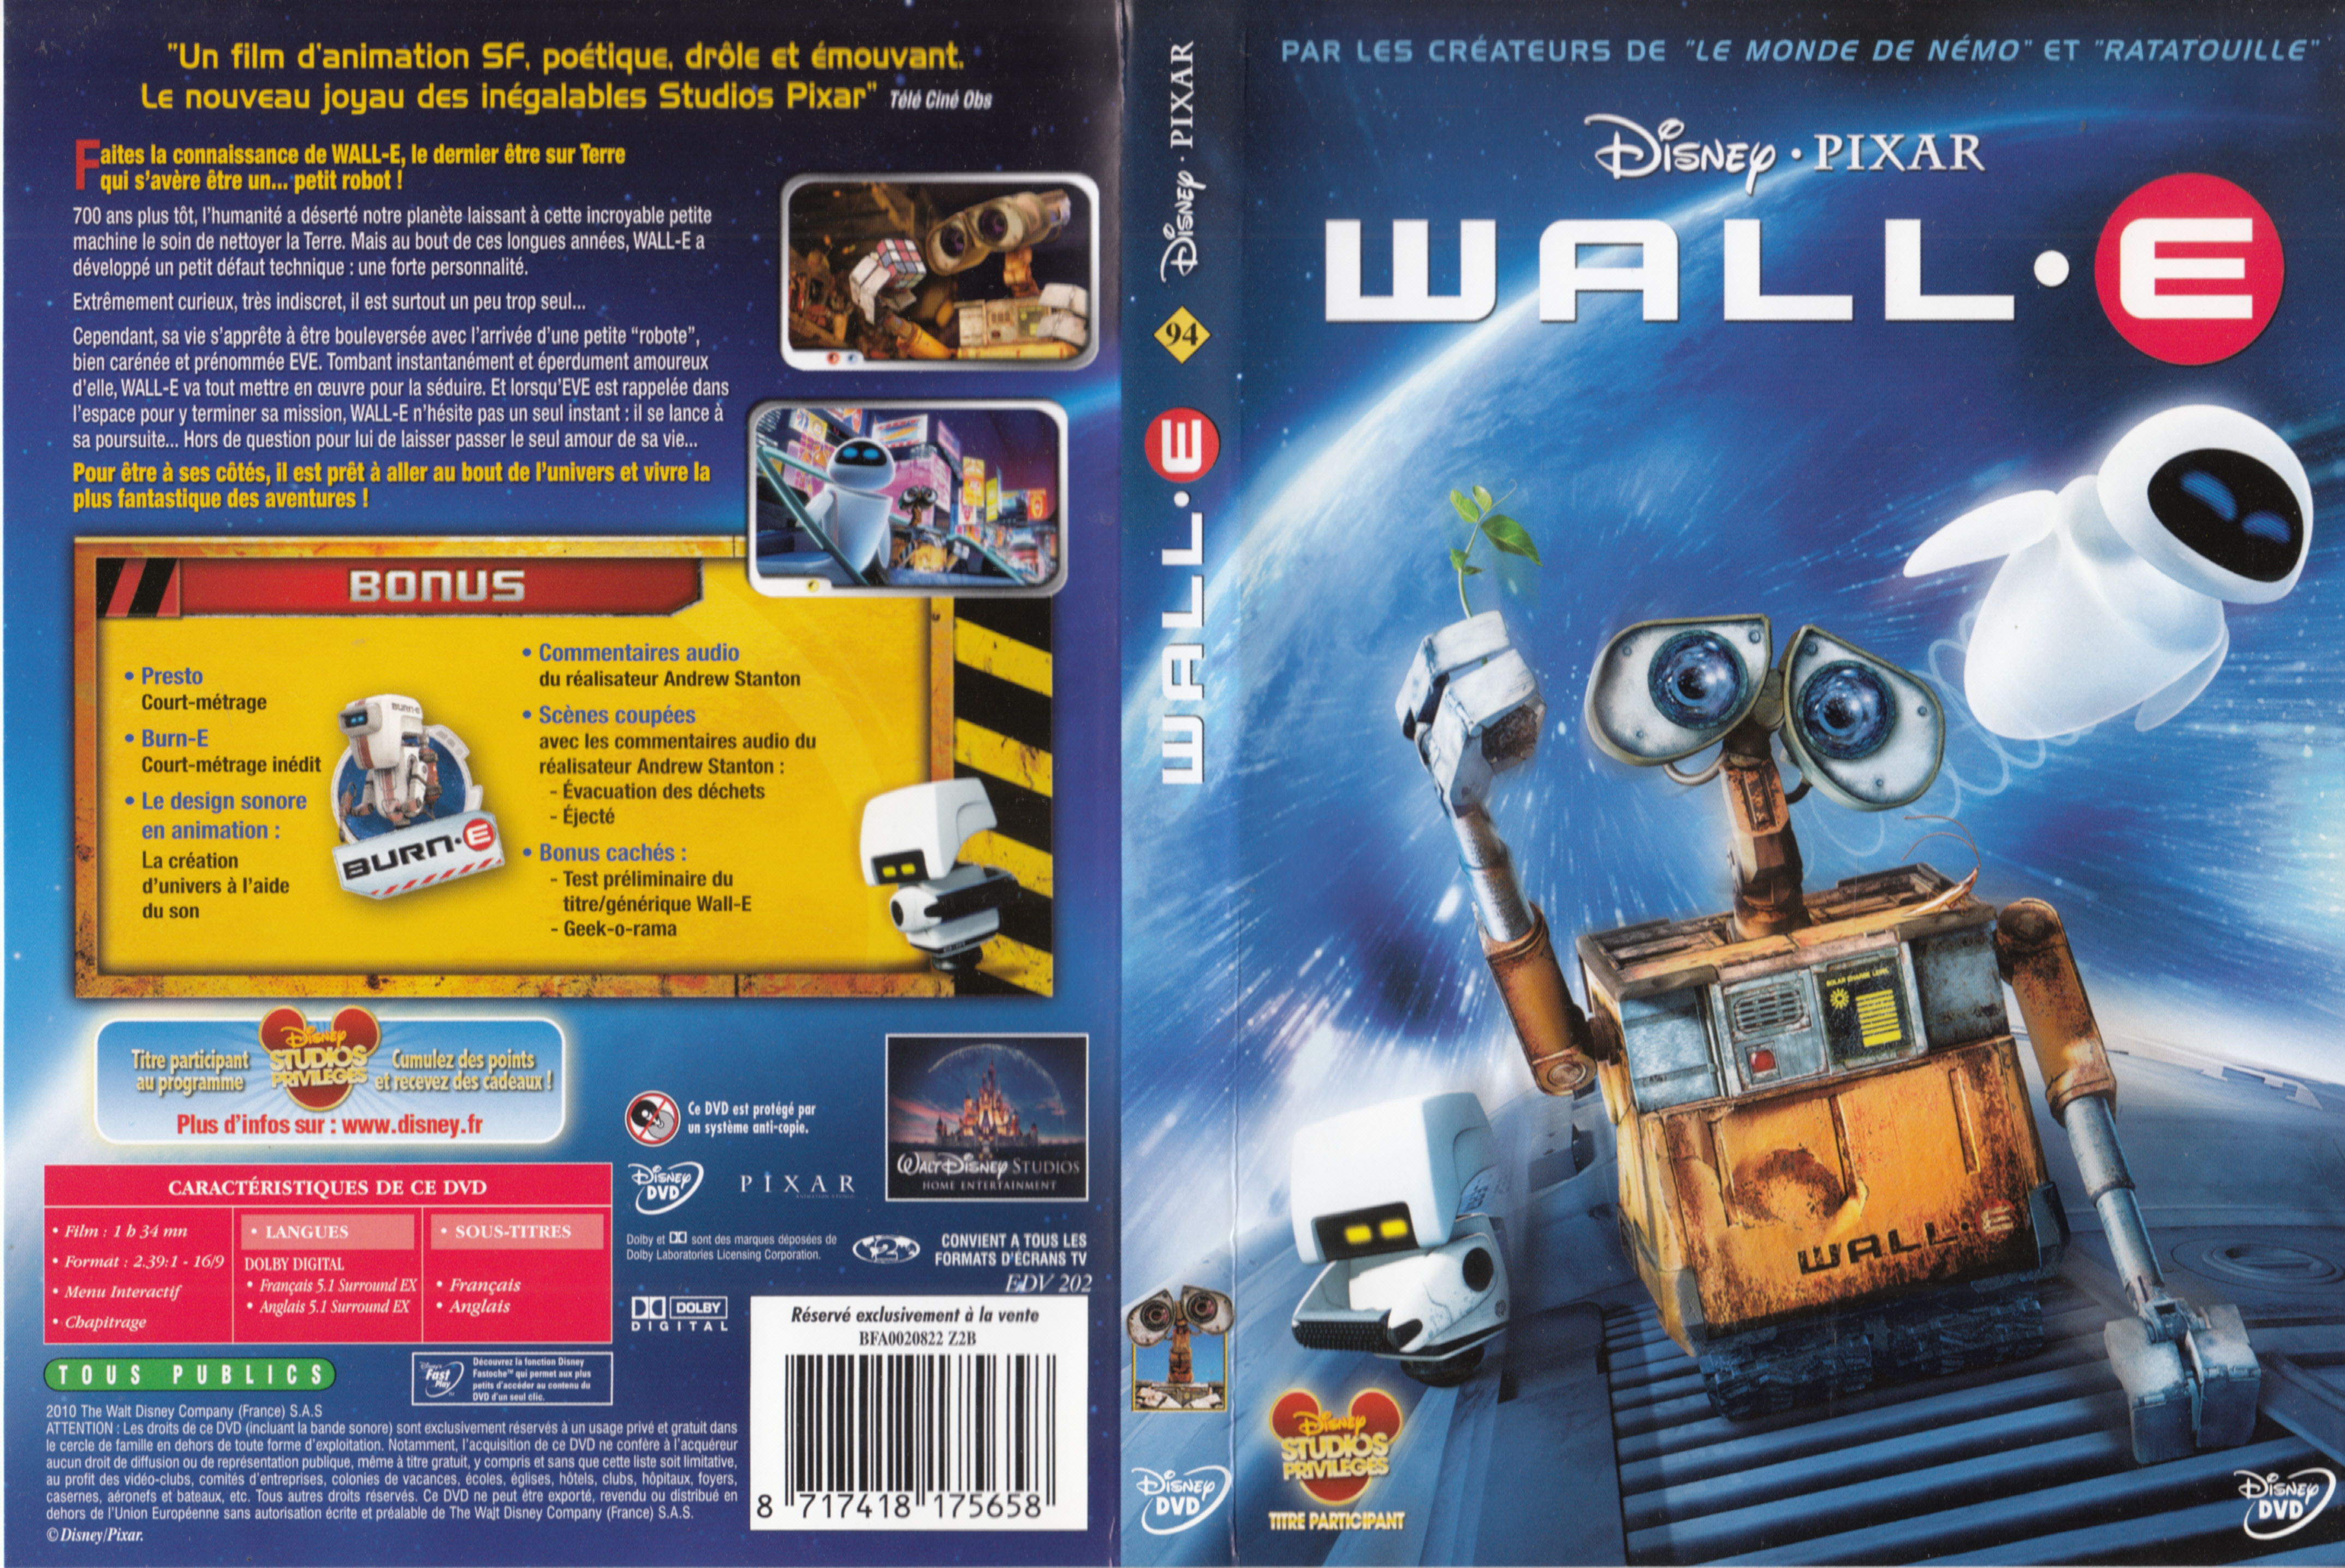 Jaquette DVD Wall-E v2